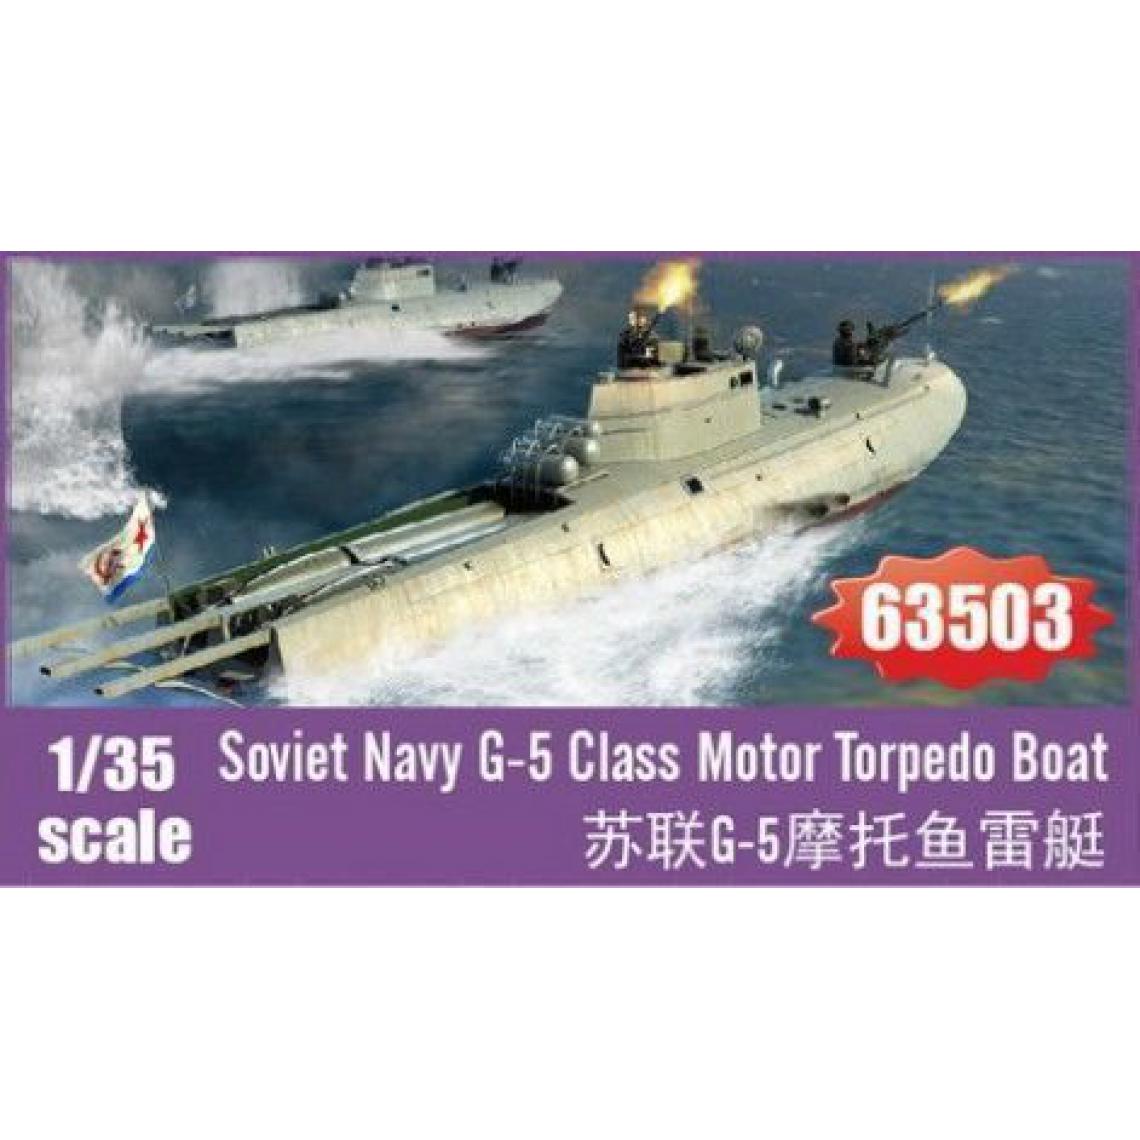 I Love Kit - Soviet Navy G-5 Class Motor Torpedo Boat - 1:35e - I LOVE KIT - Accessoires et pièces